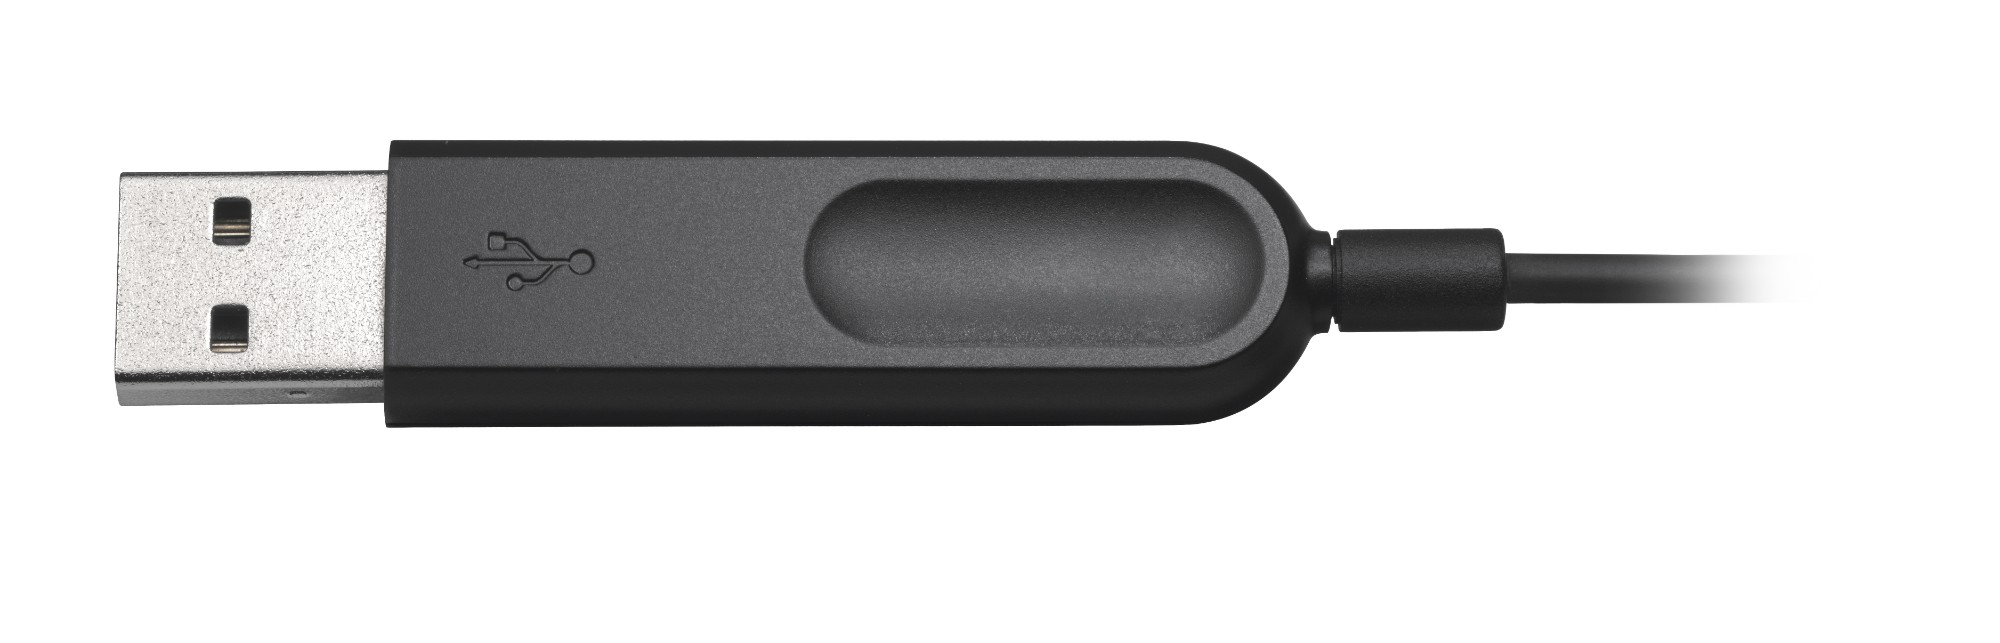 Logitech H340 Headset Head-band USB Type-A Black